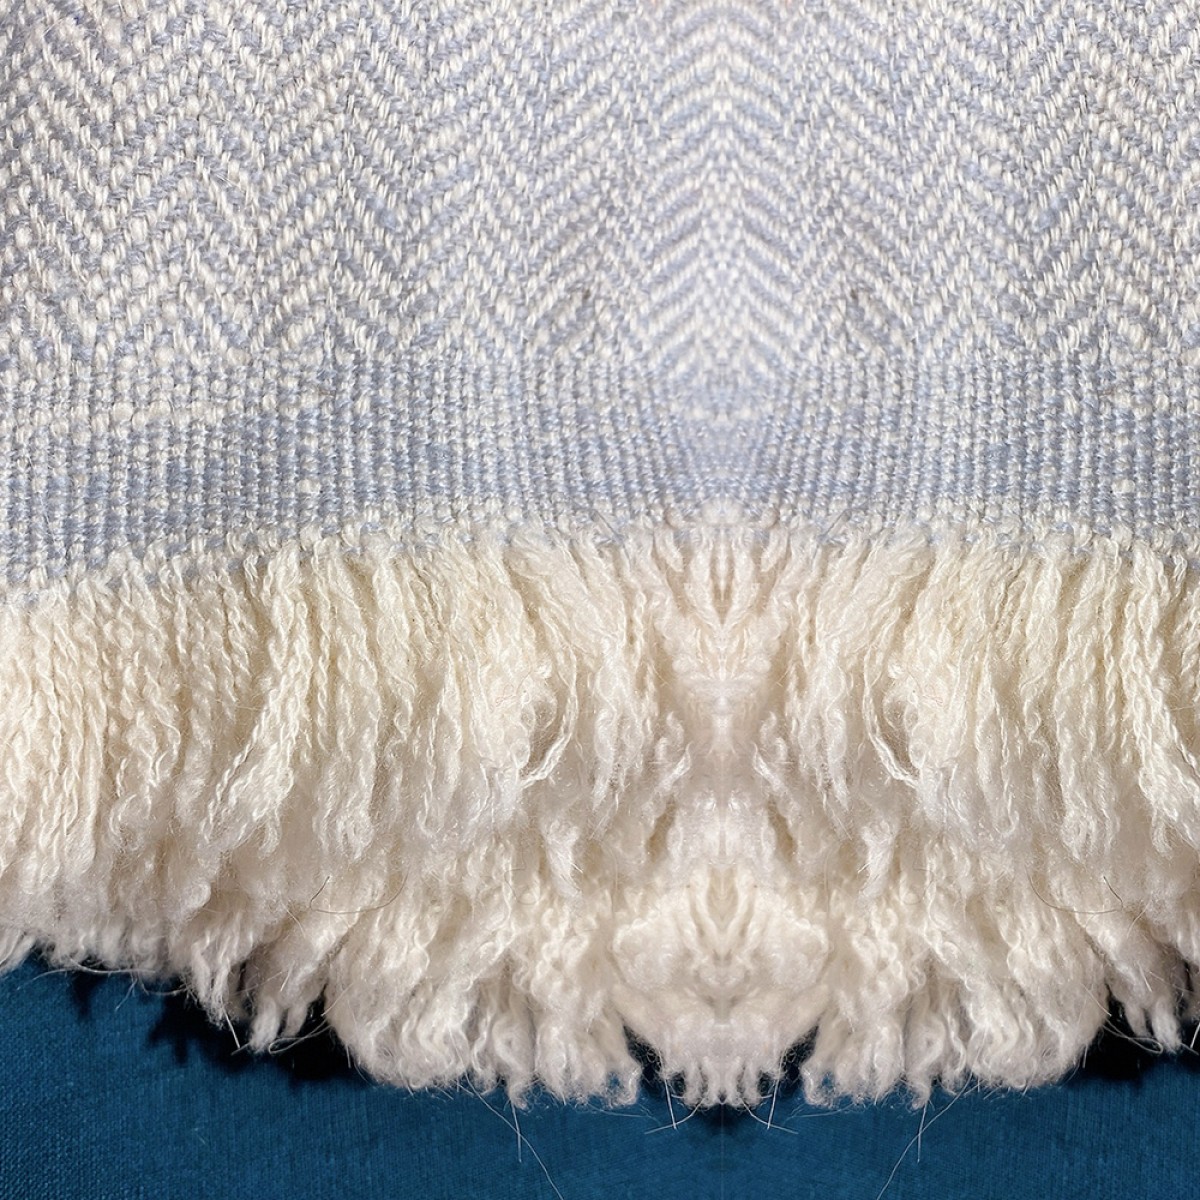 Blue Grey Herringbone Weave Baby Cashmere Blanket (Made to Order)